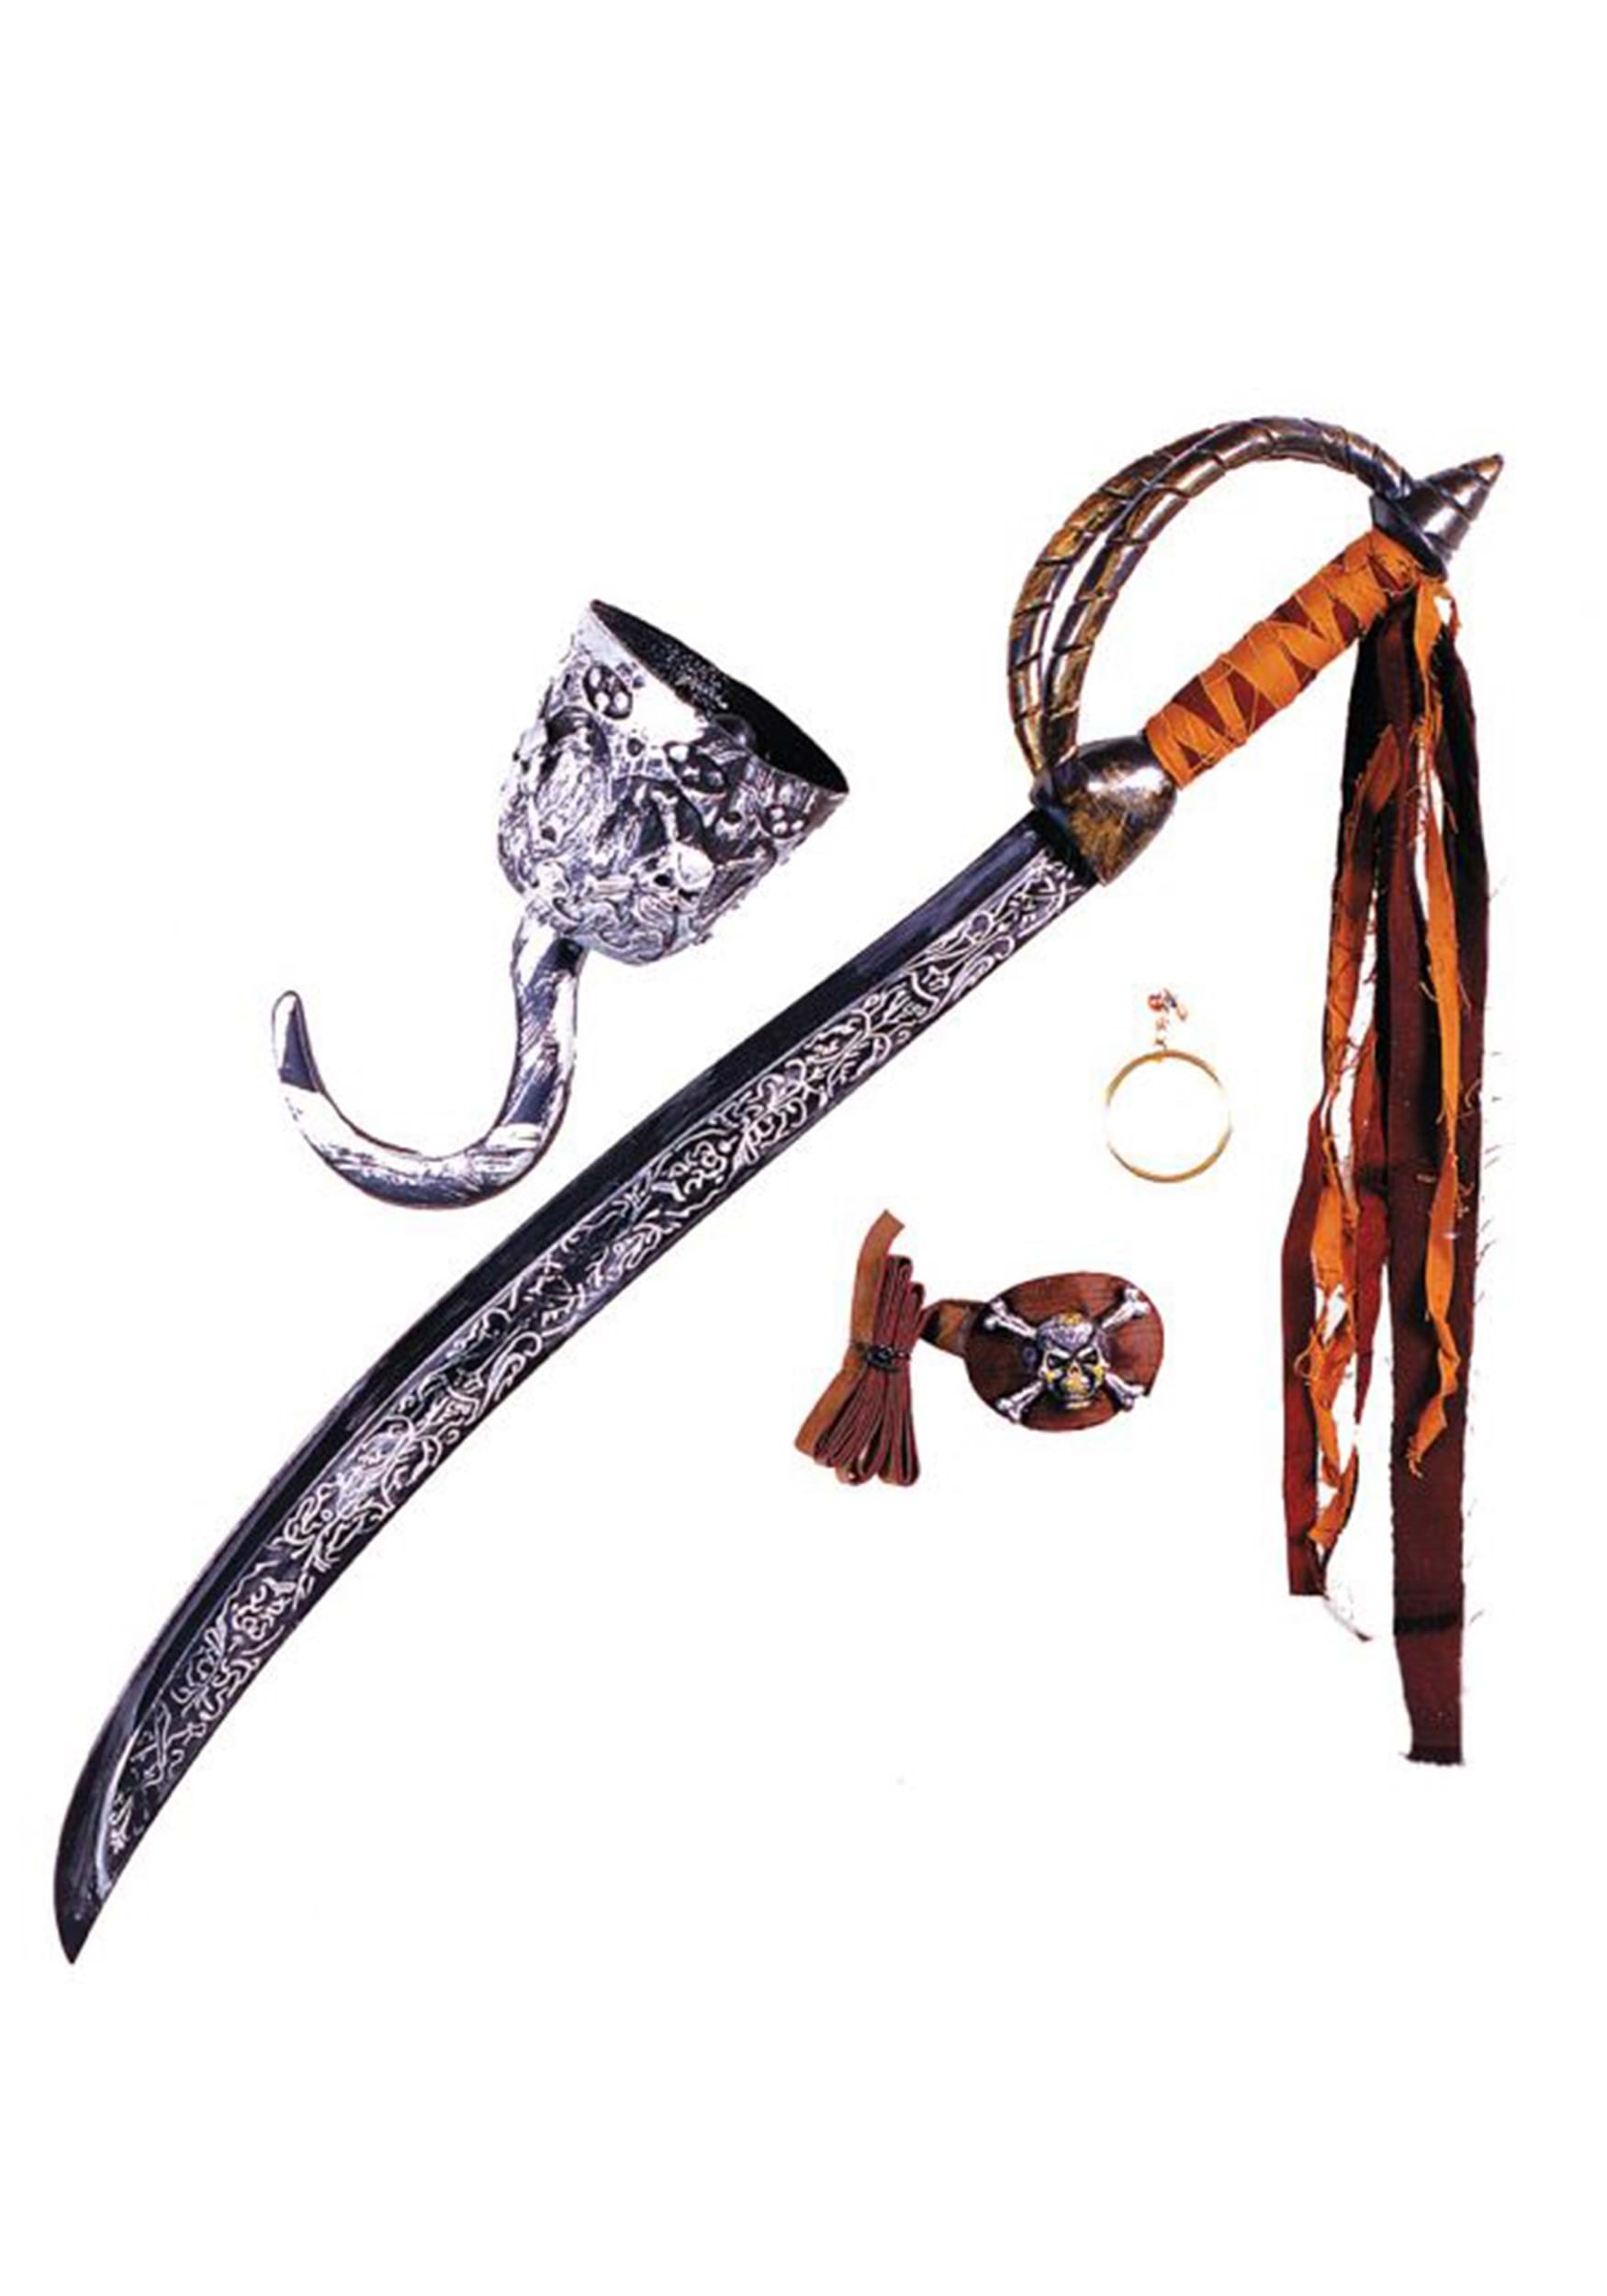 Caribbean Pirate Sword & Accessory Kit , Pirate Accessories